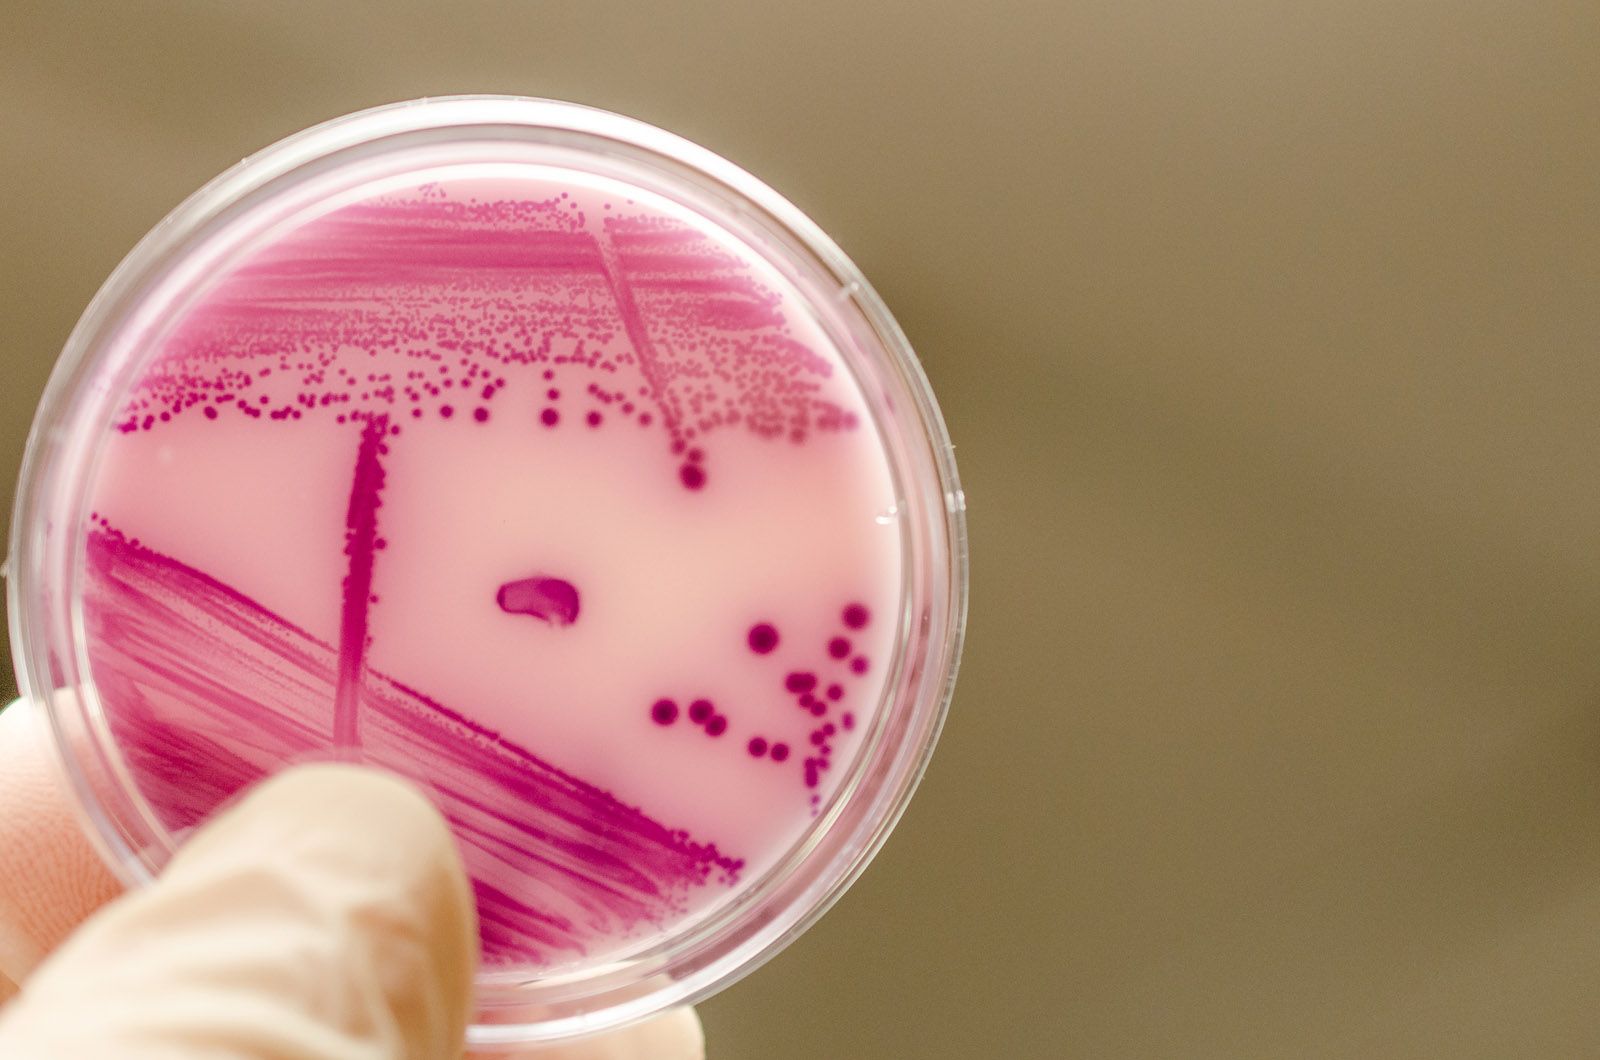 Descubren que la bacteria Escherichia coli podría contribuir al cáncer de intestino